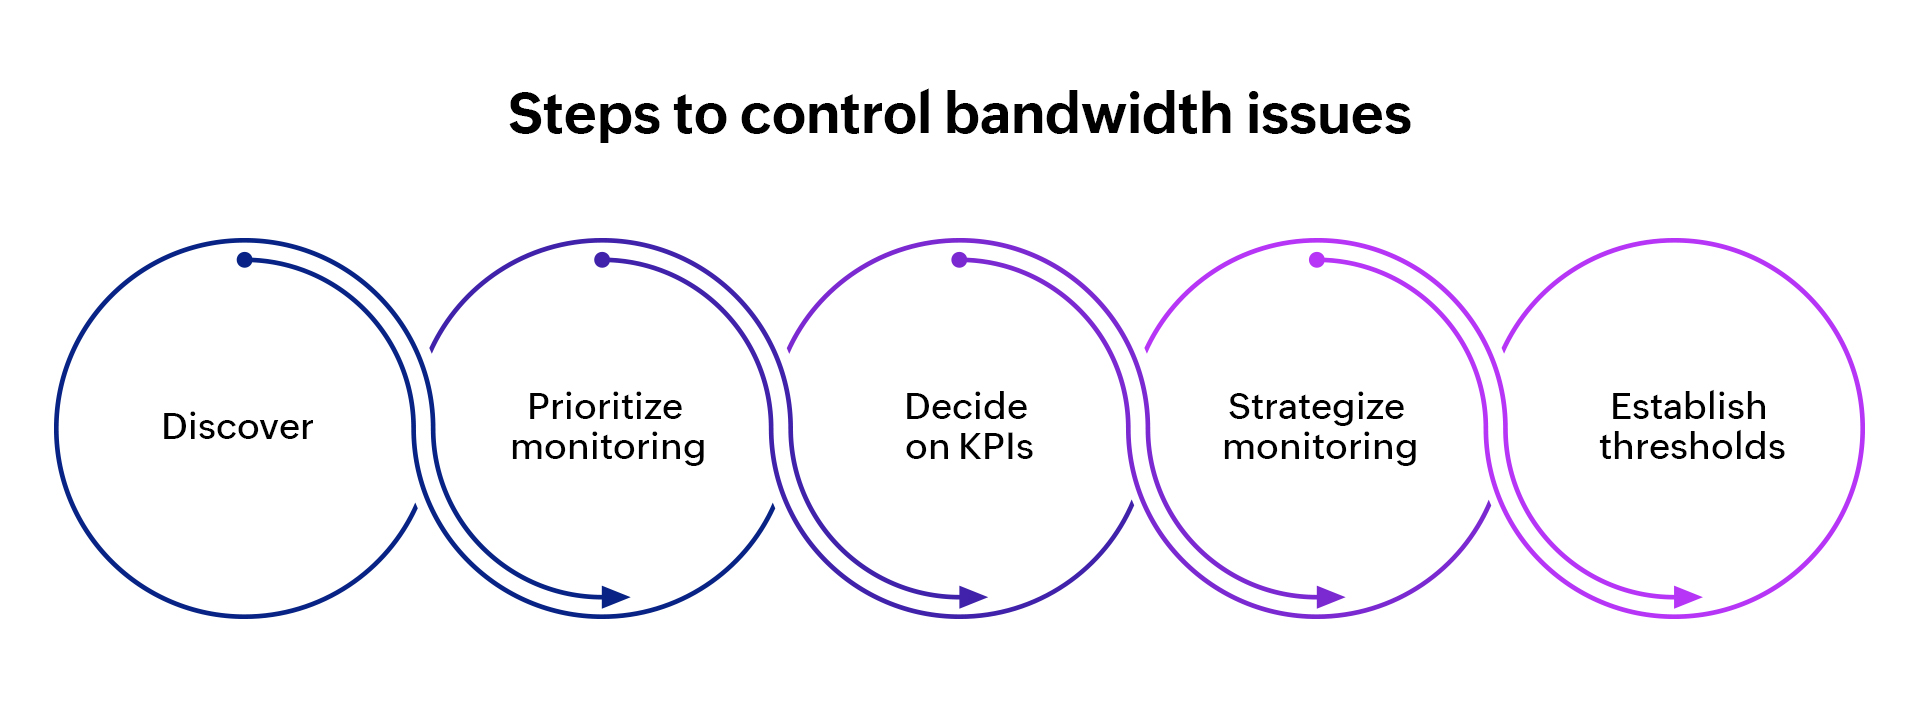 Ways to control bandwidth